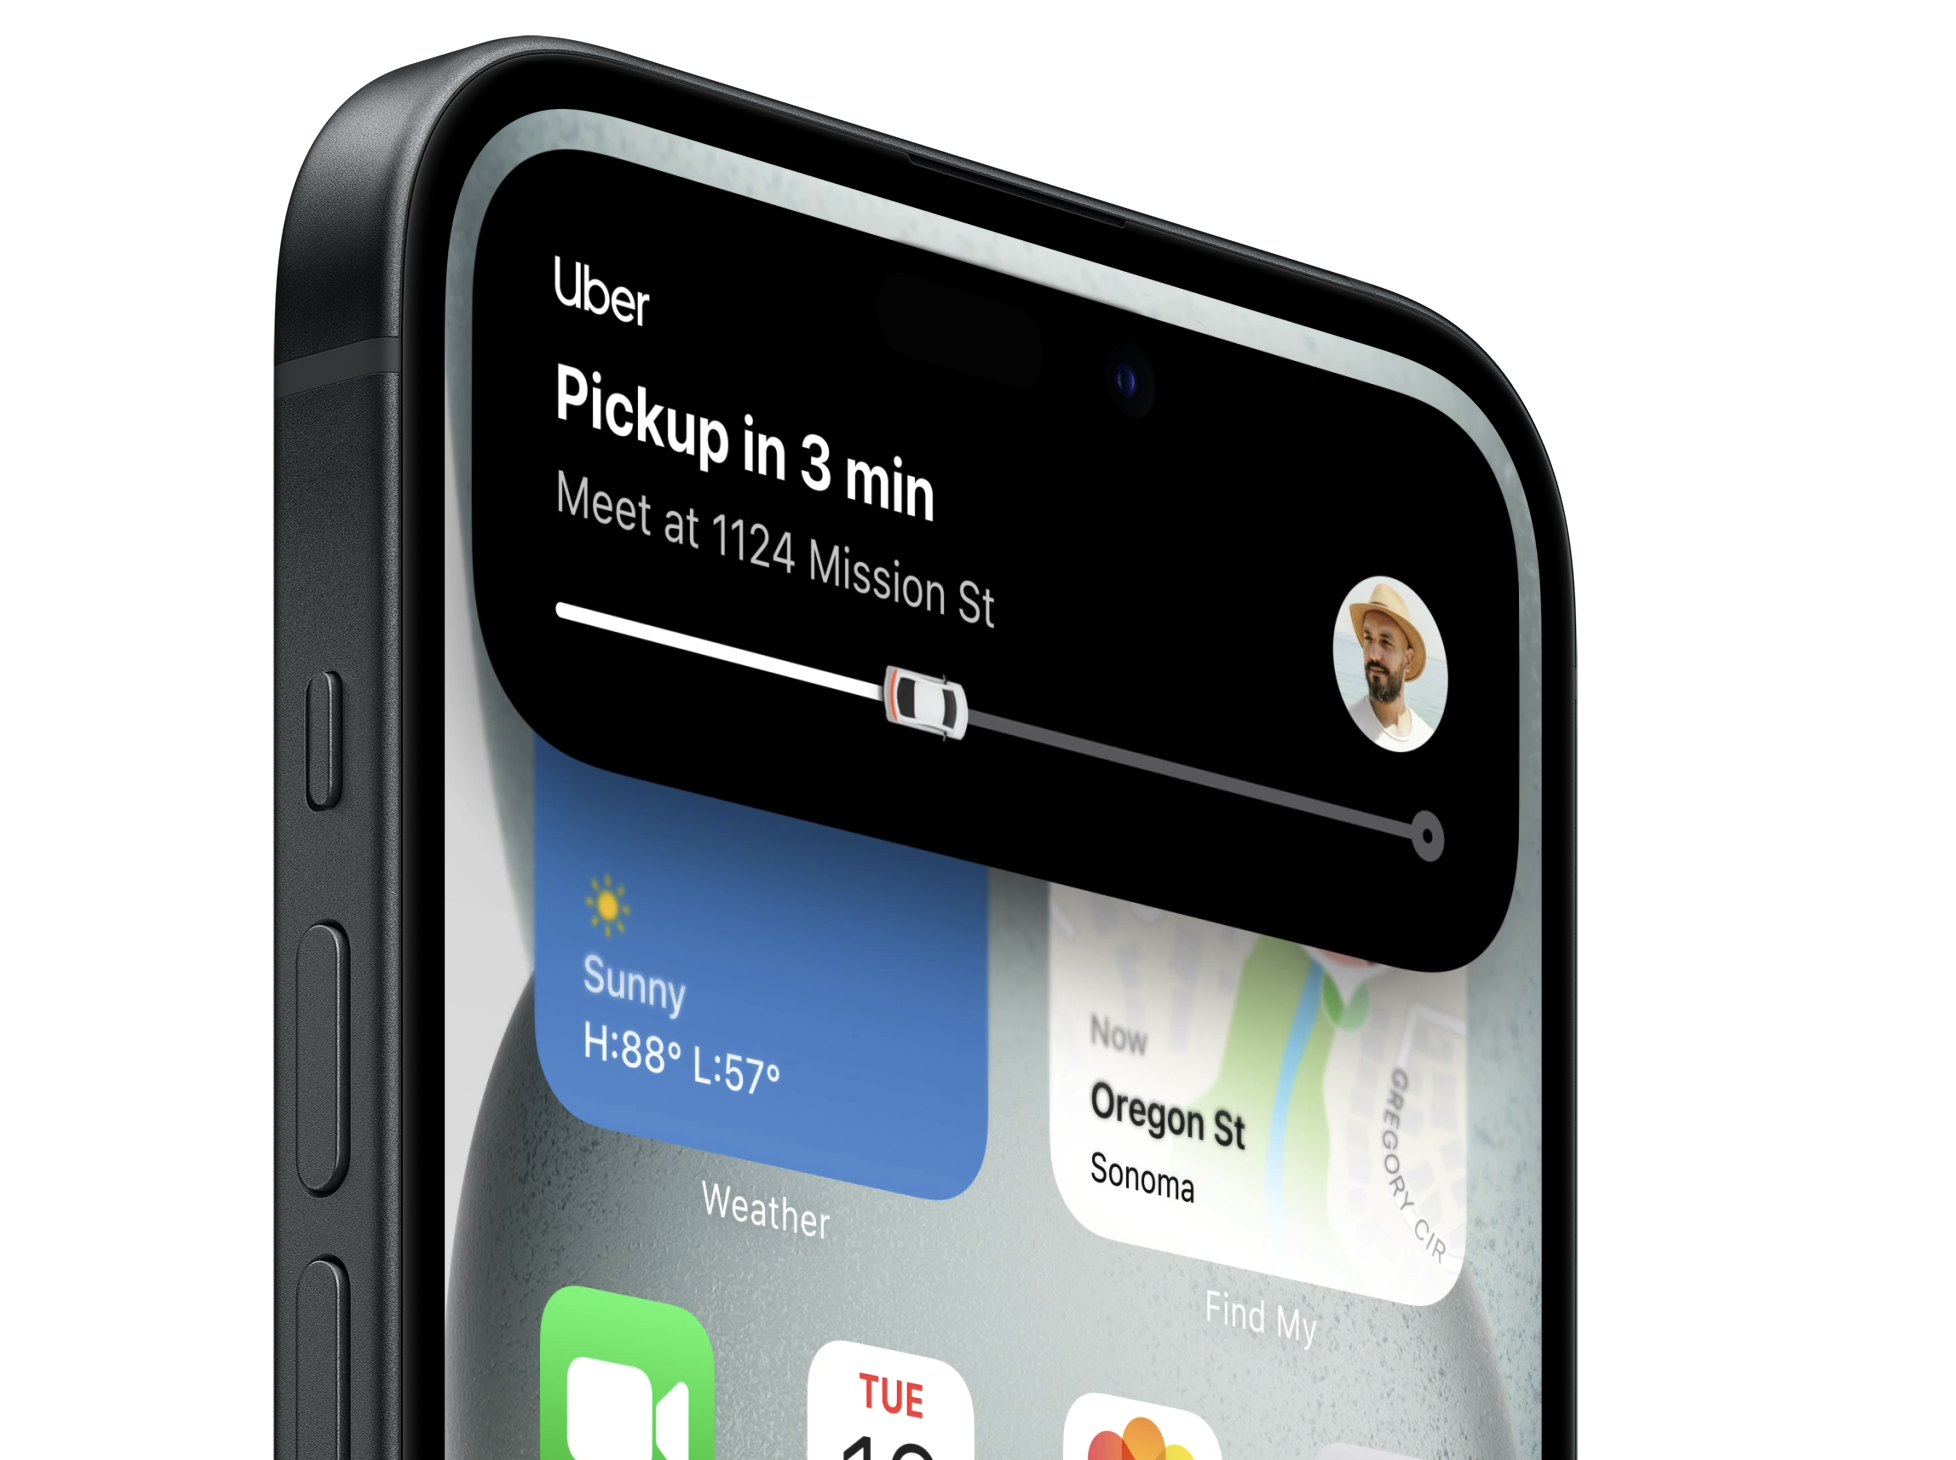 Now Apple must ensure iPhone updates